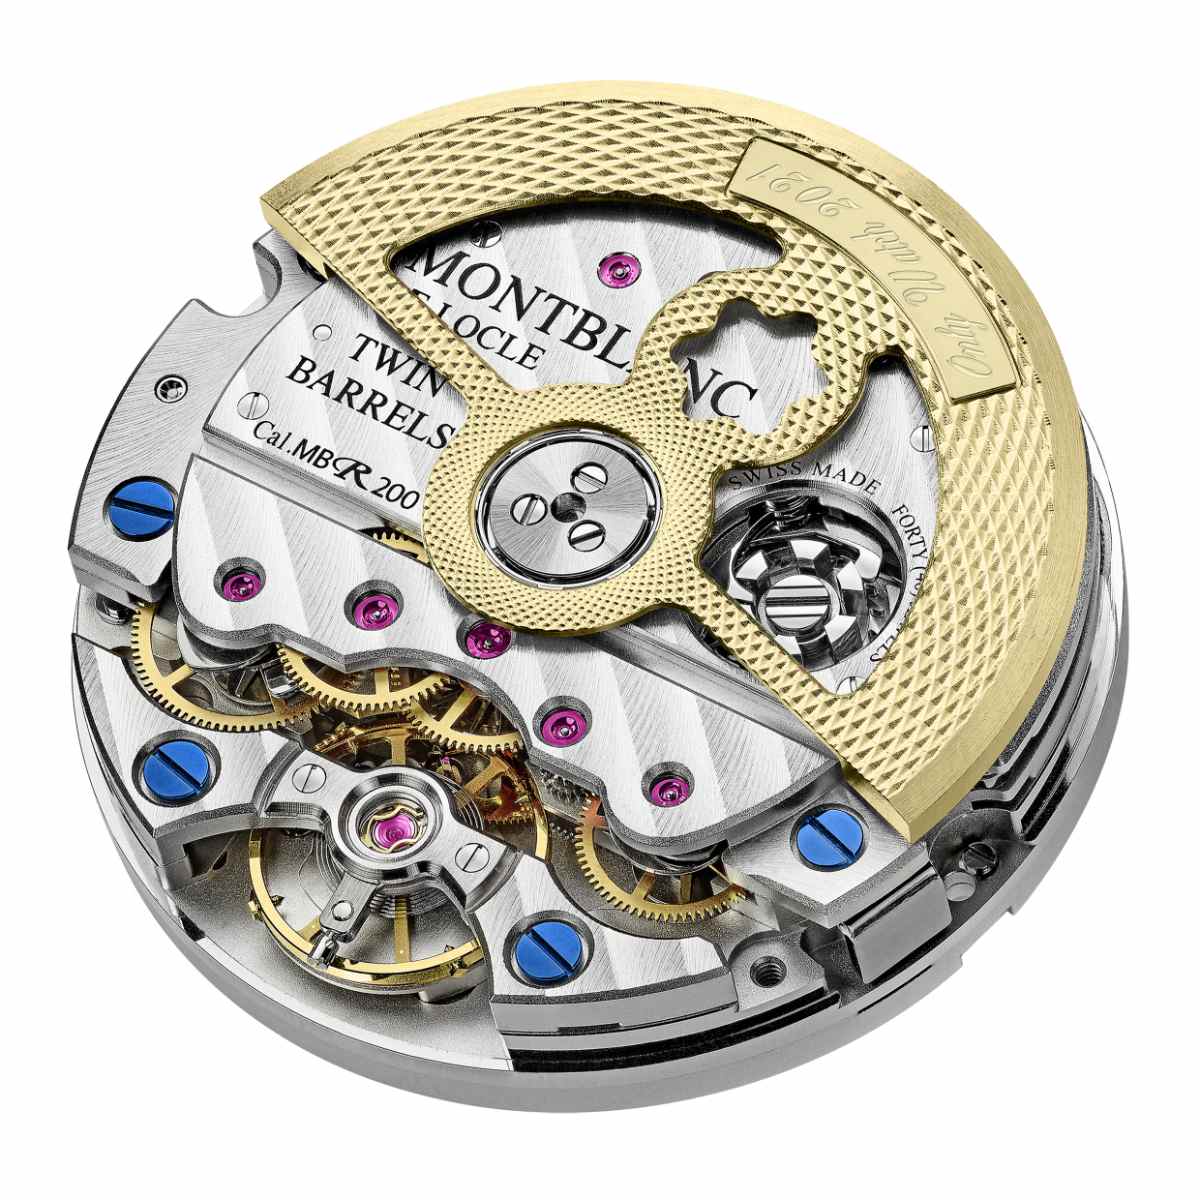 Montblanc Star Legacy Nicolas Rieussec Chronograph Only Watch ’21 Unique Piece